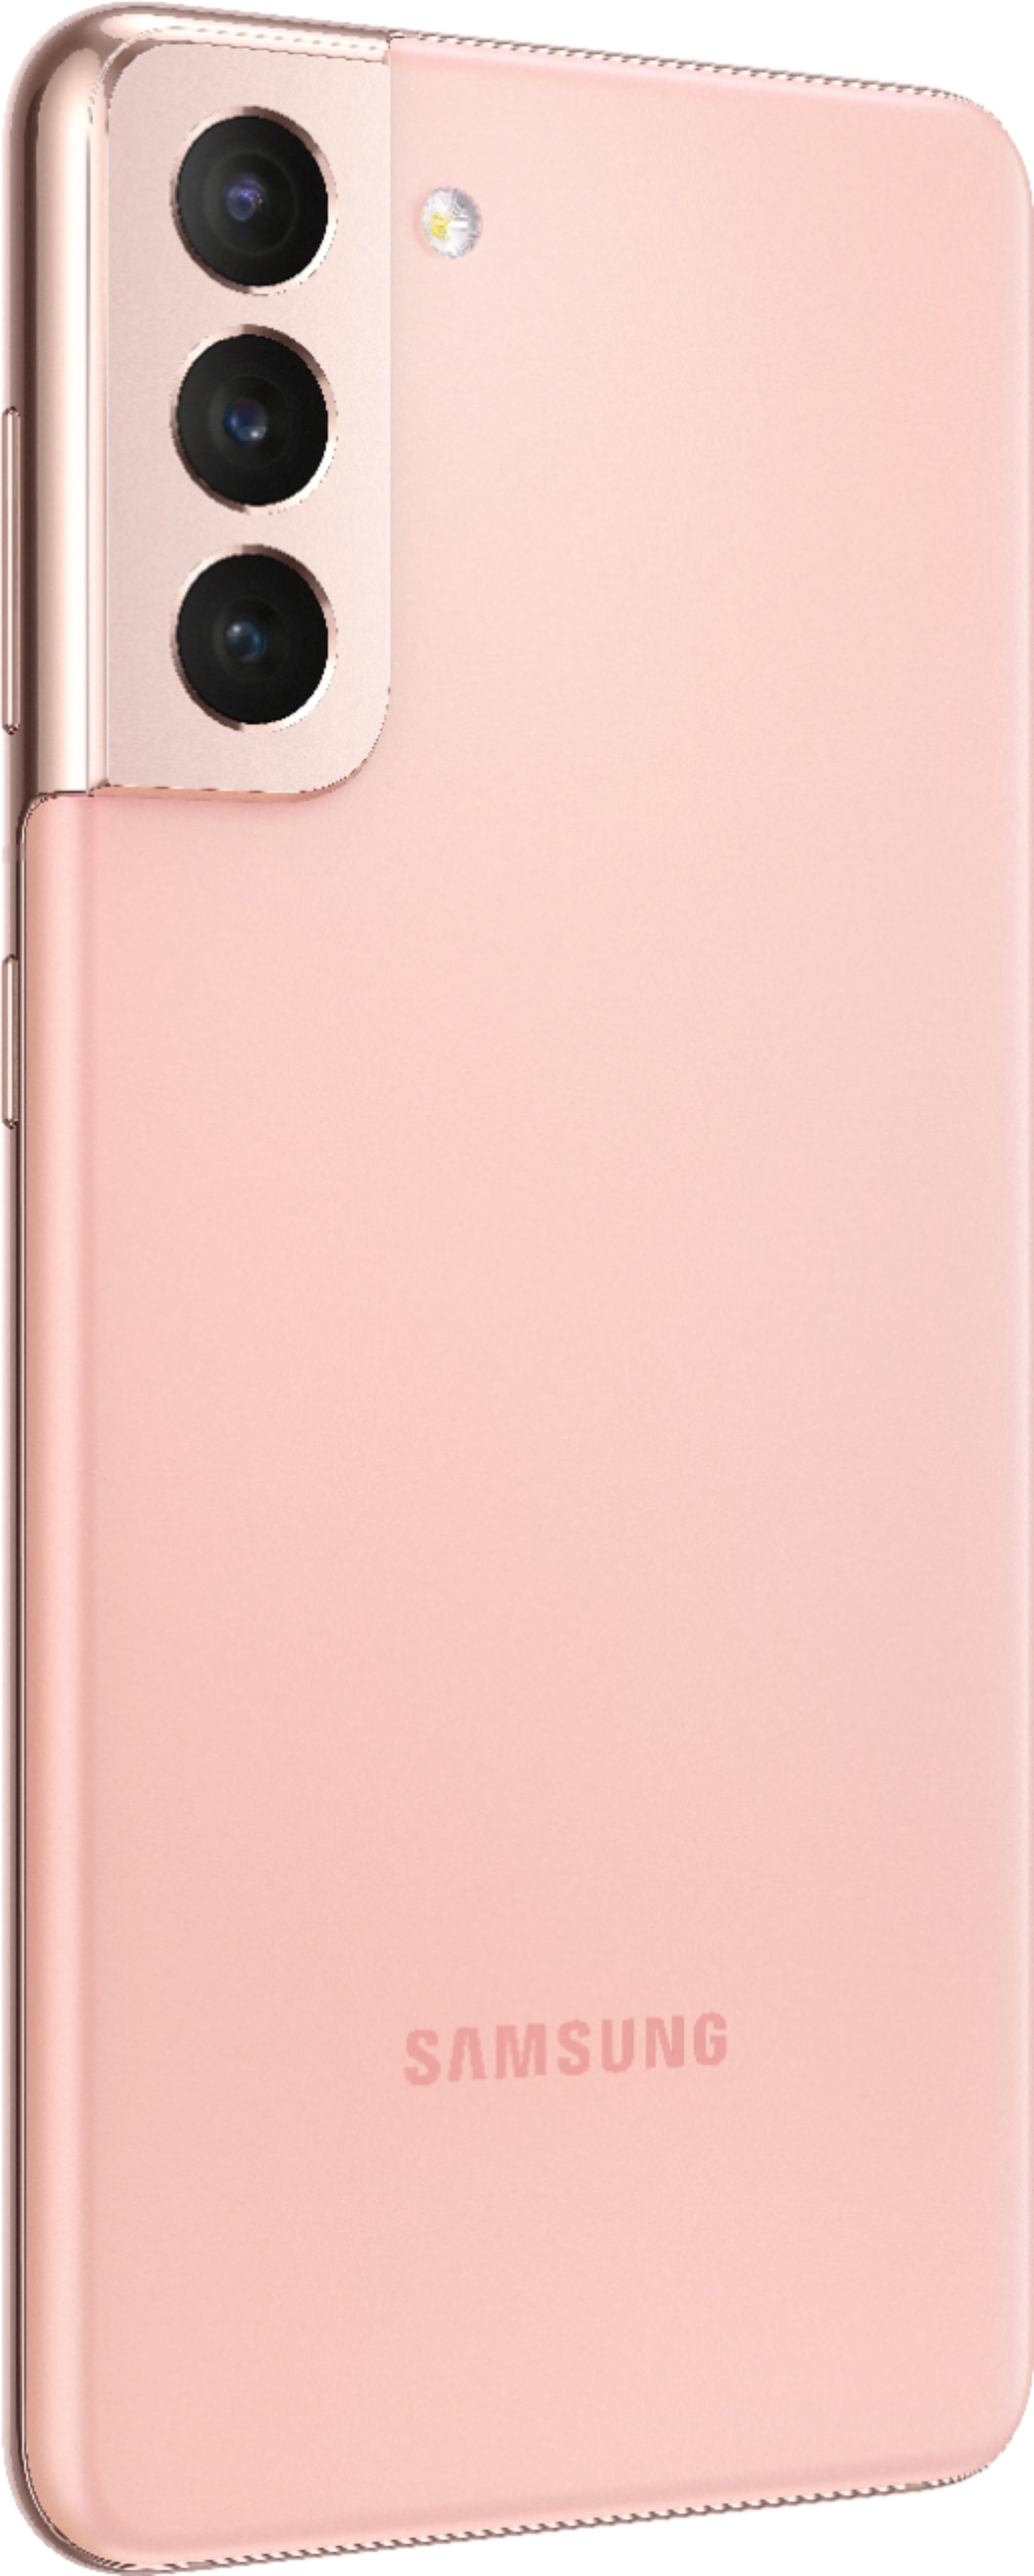 Samsung Galaxy S21 5g 128gb Unlocked Phantom Pink Sm G991uziaxaa Best Buy